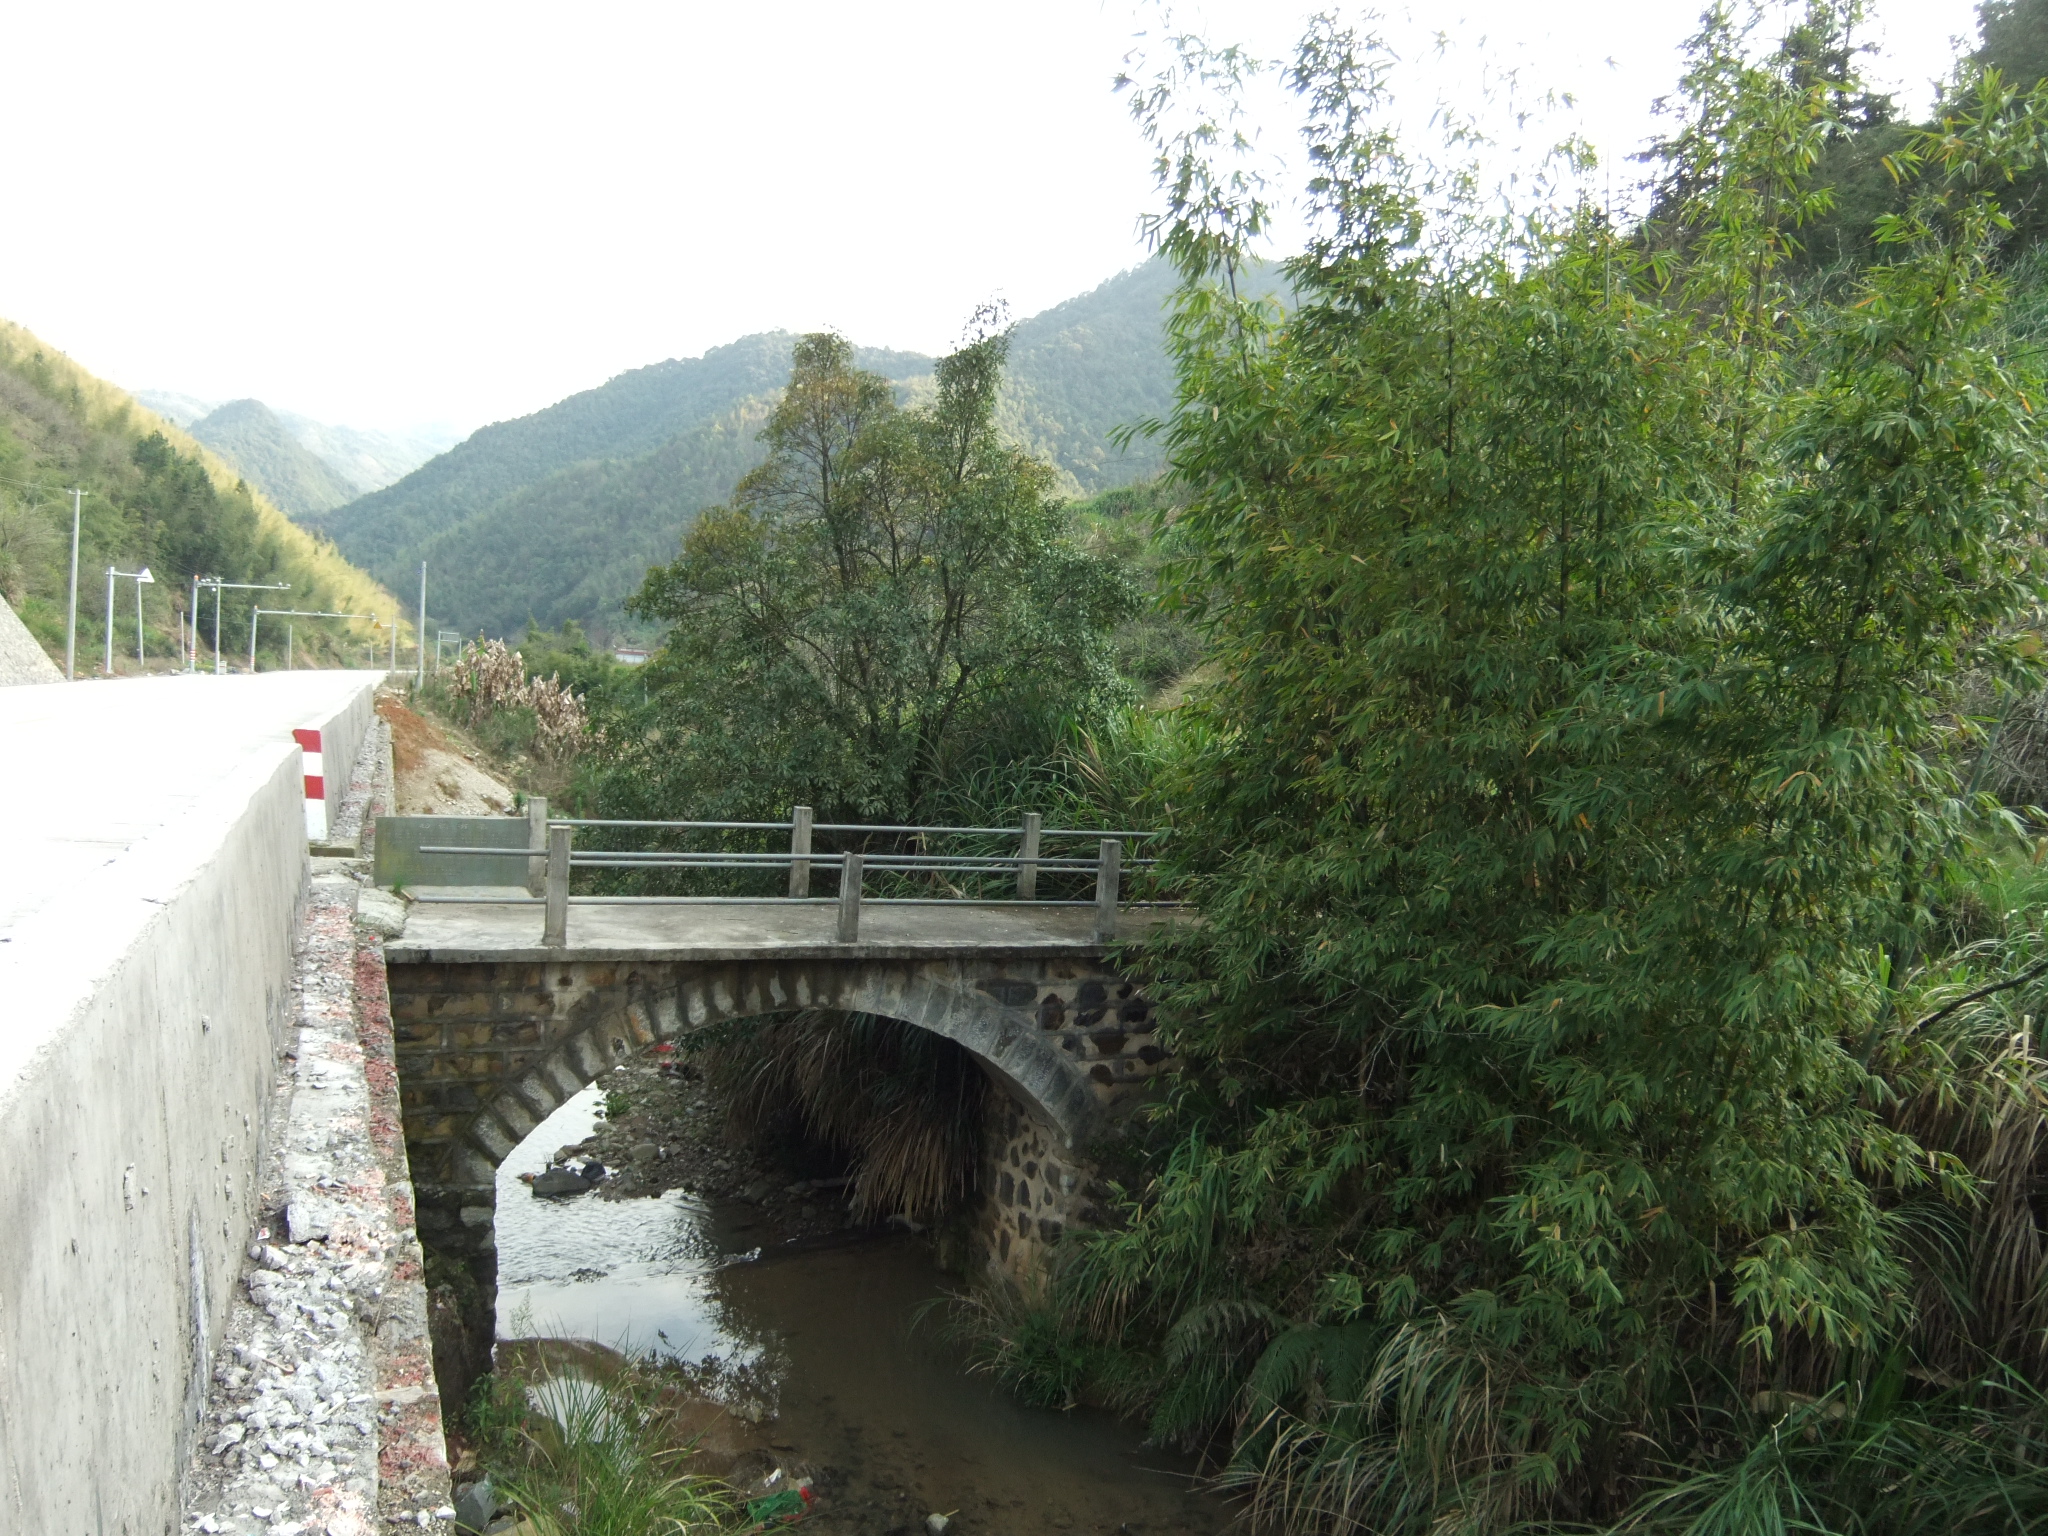 File:Gaotou - roadside bridge - DSCF3106.JPG - Wikimedia Commons